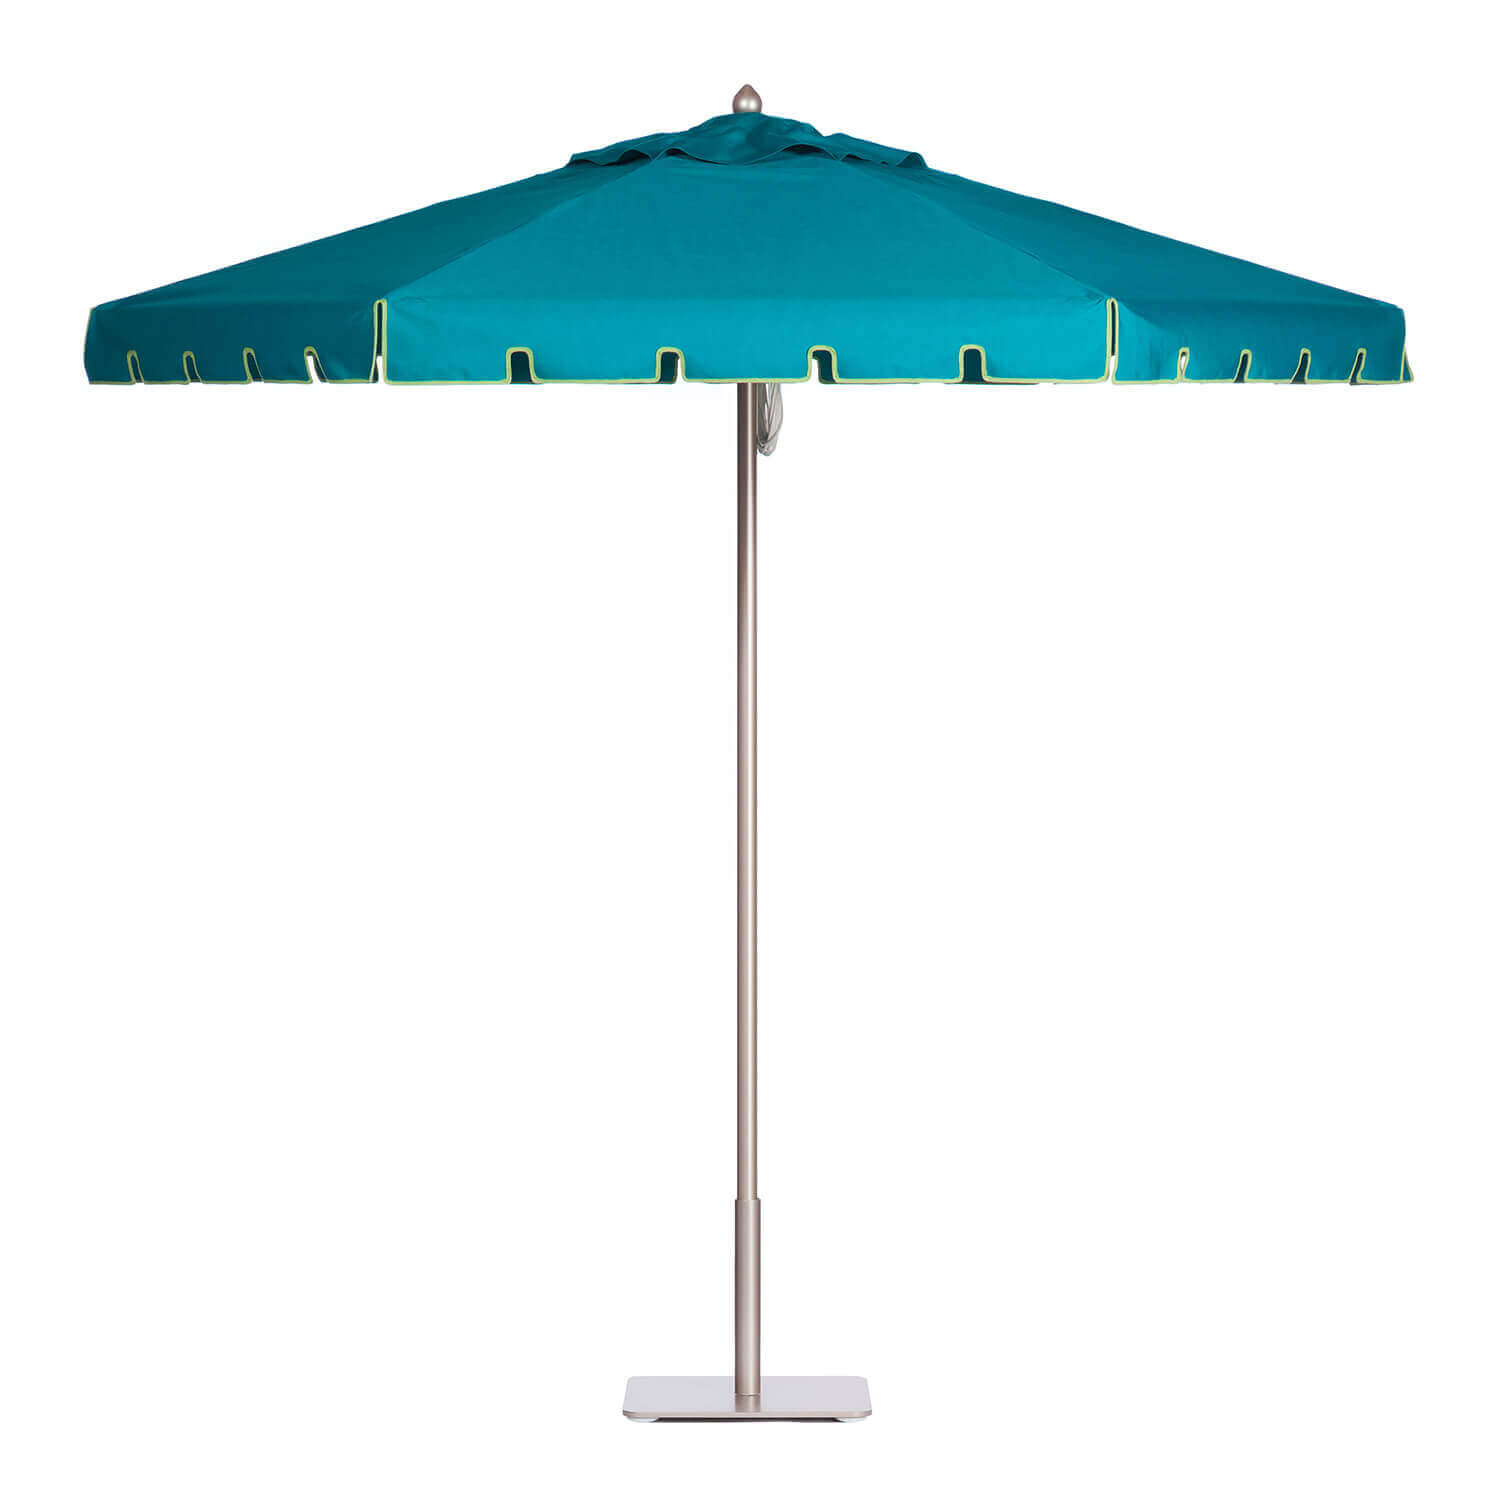 Santa Barbara Blue Umbrella Image